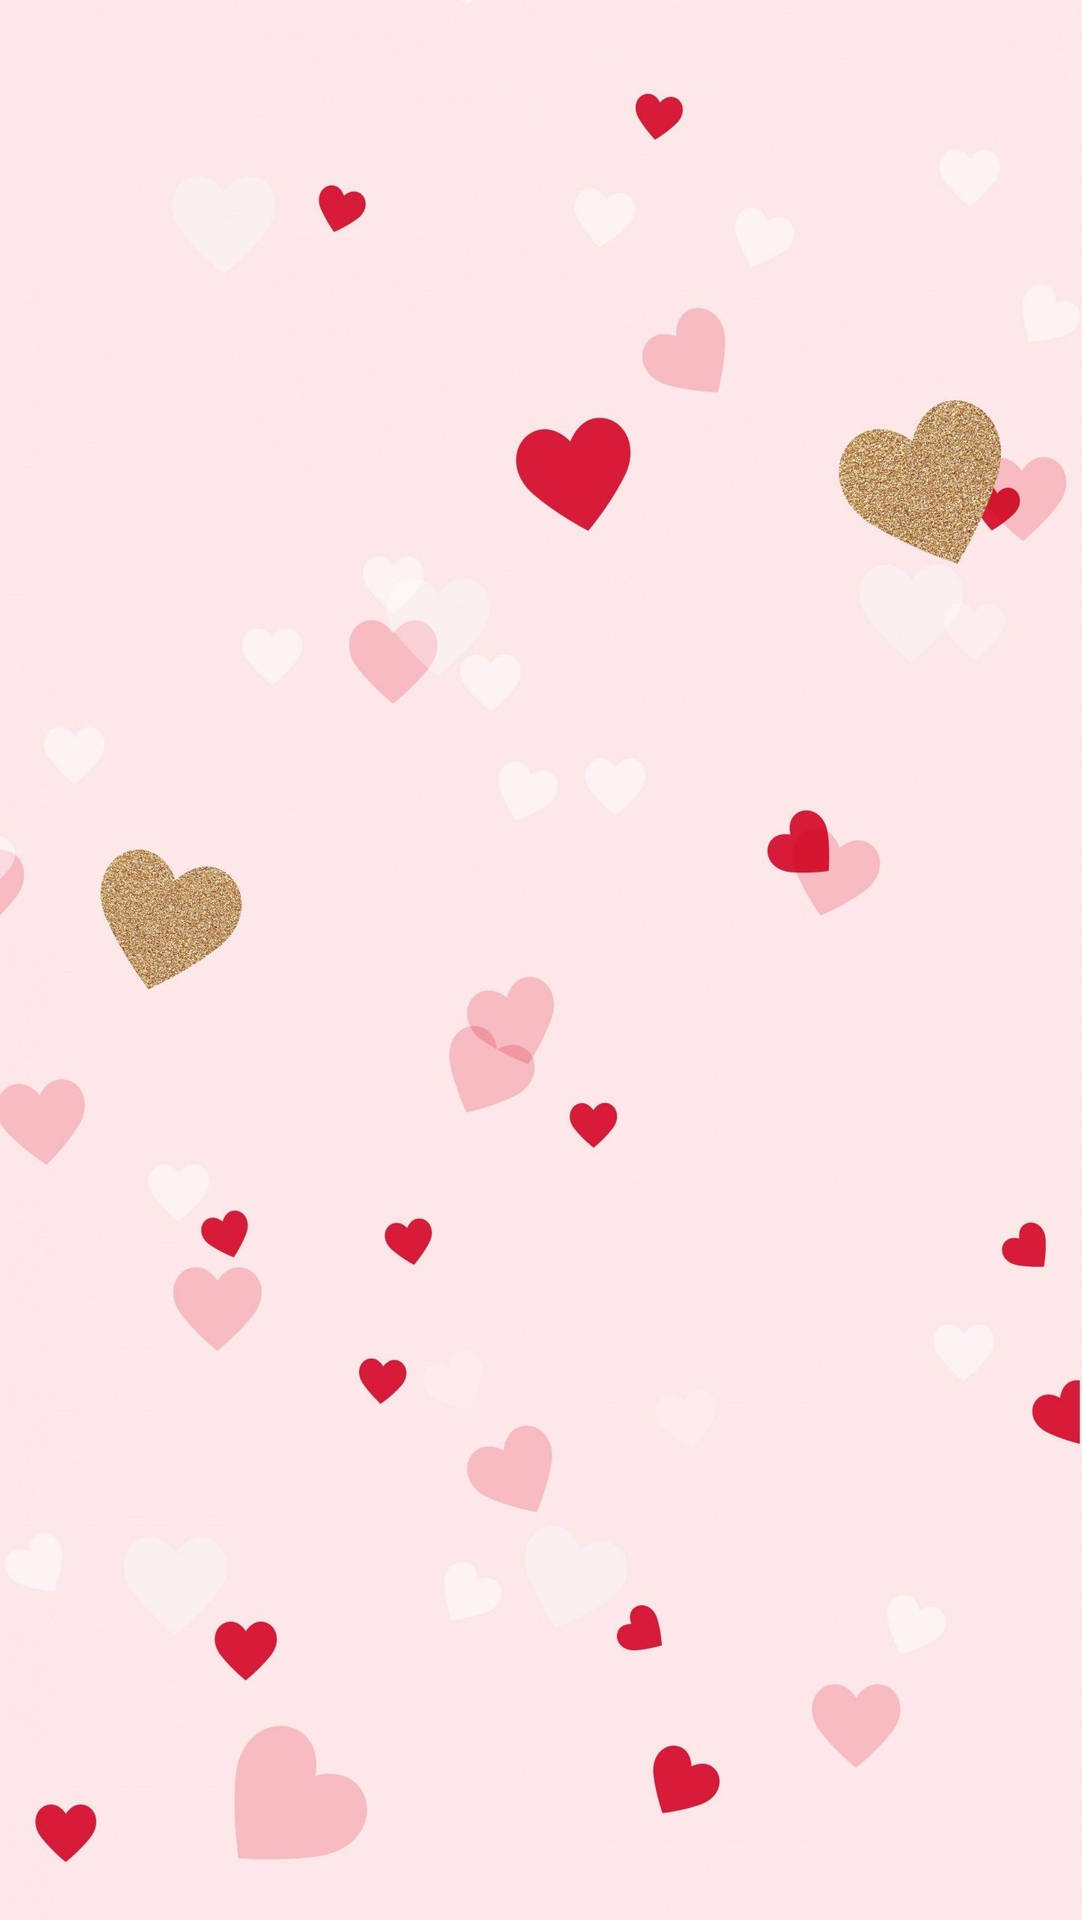 Tiny Hearts Cute Iphone Lock Screen Background